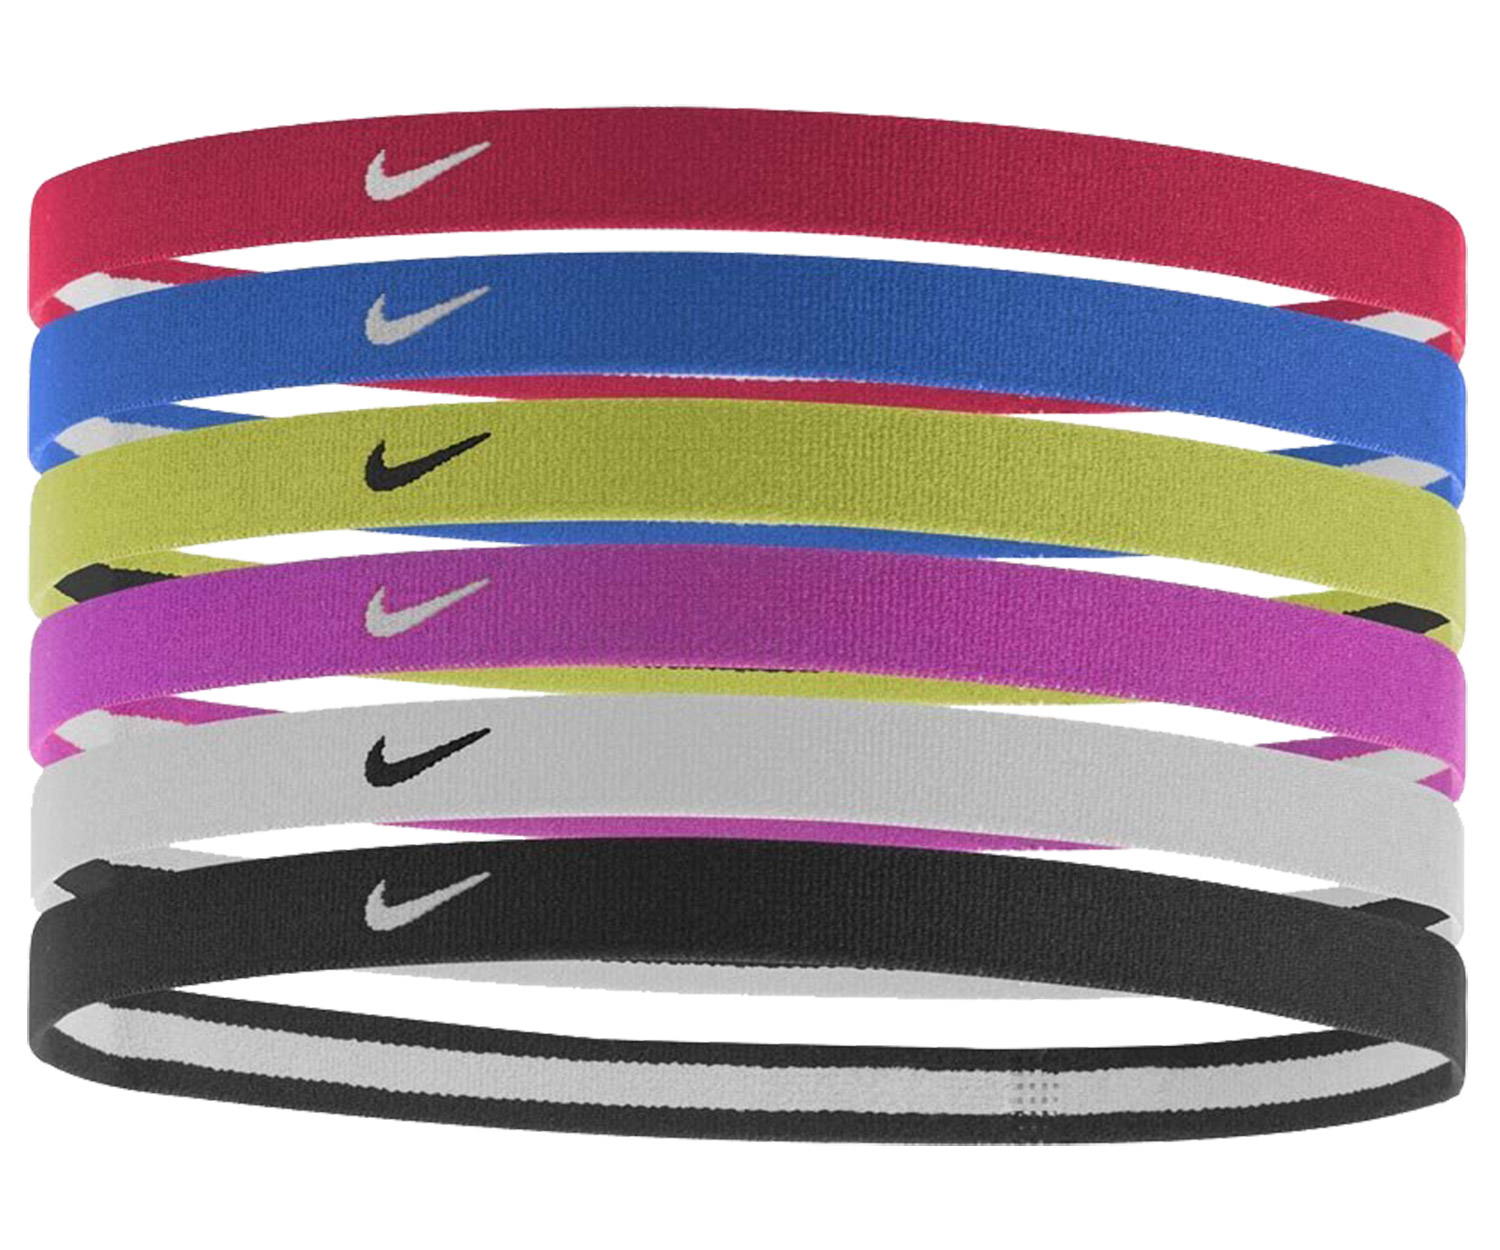 Резинка найк. Nike Swoosh Headband. Nike Swoosh Sport Headbands 6pk. Повязка Nike Swoosh Headband. Nike Swoosh Sport Headbands 6 шт.